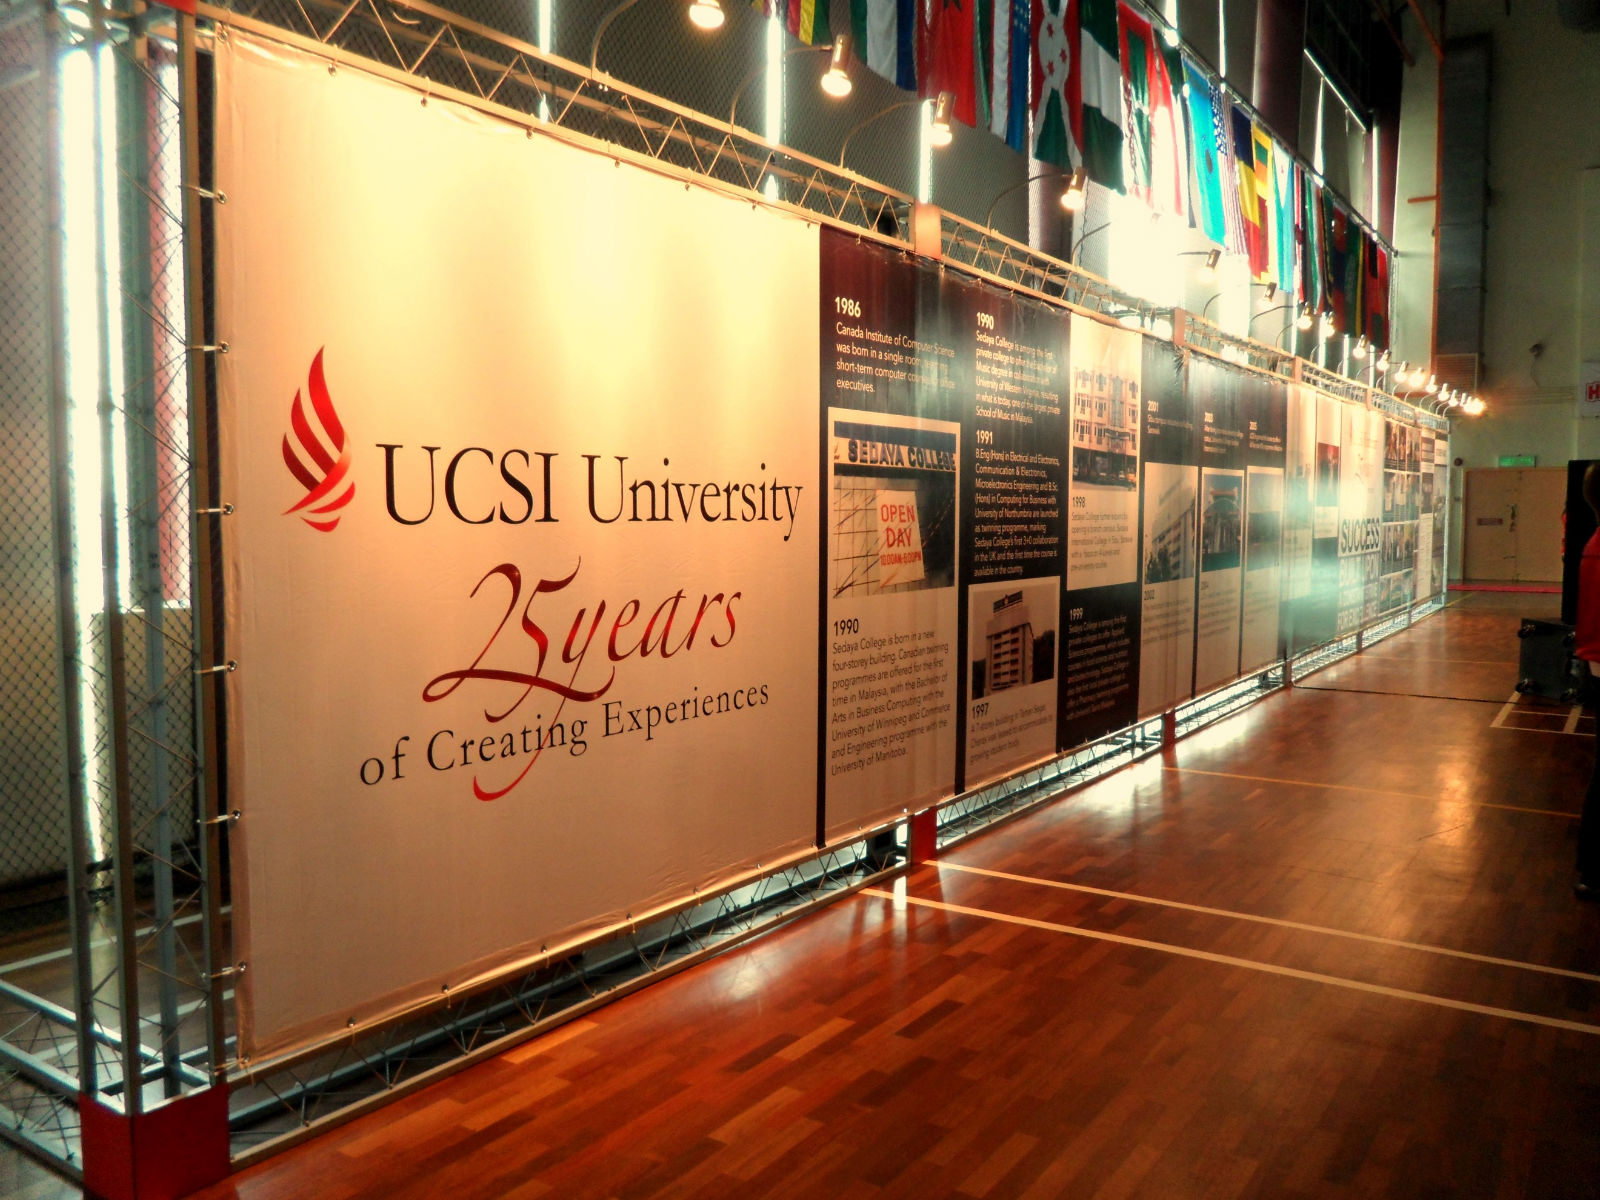 ais-ucsi.blogspot.com: UCSI University Orientation Sept 2011 and AIS2 AGM